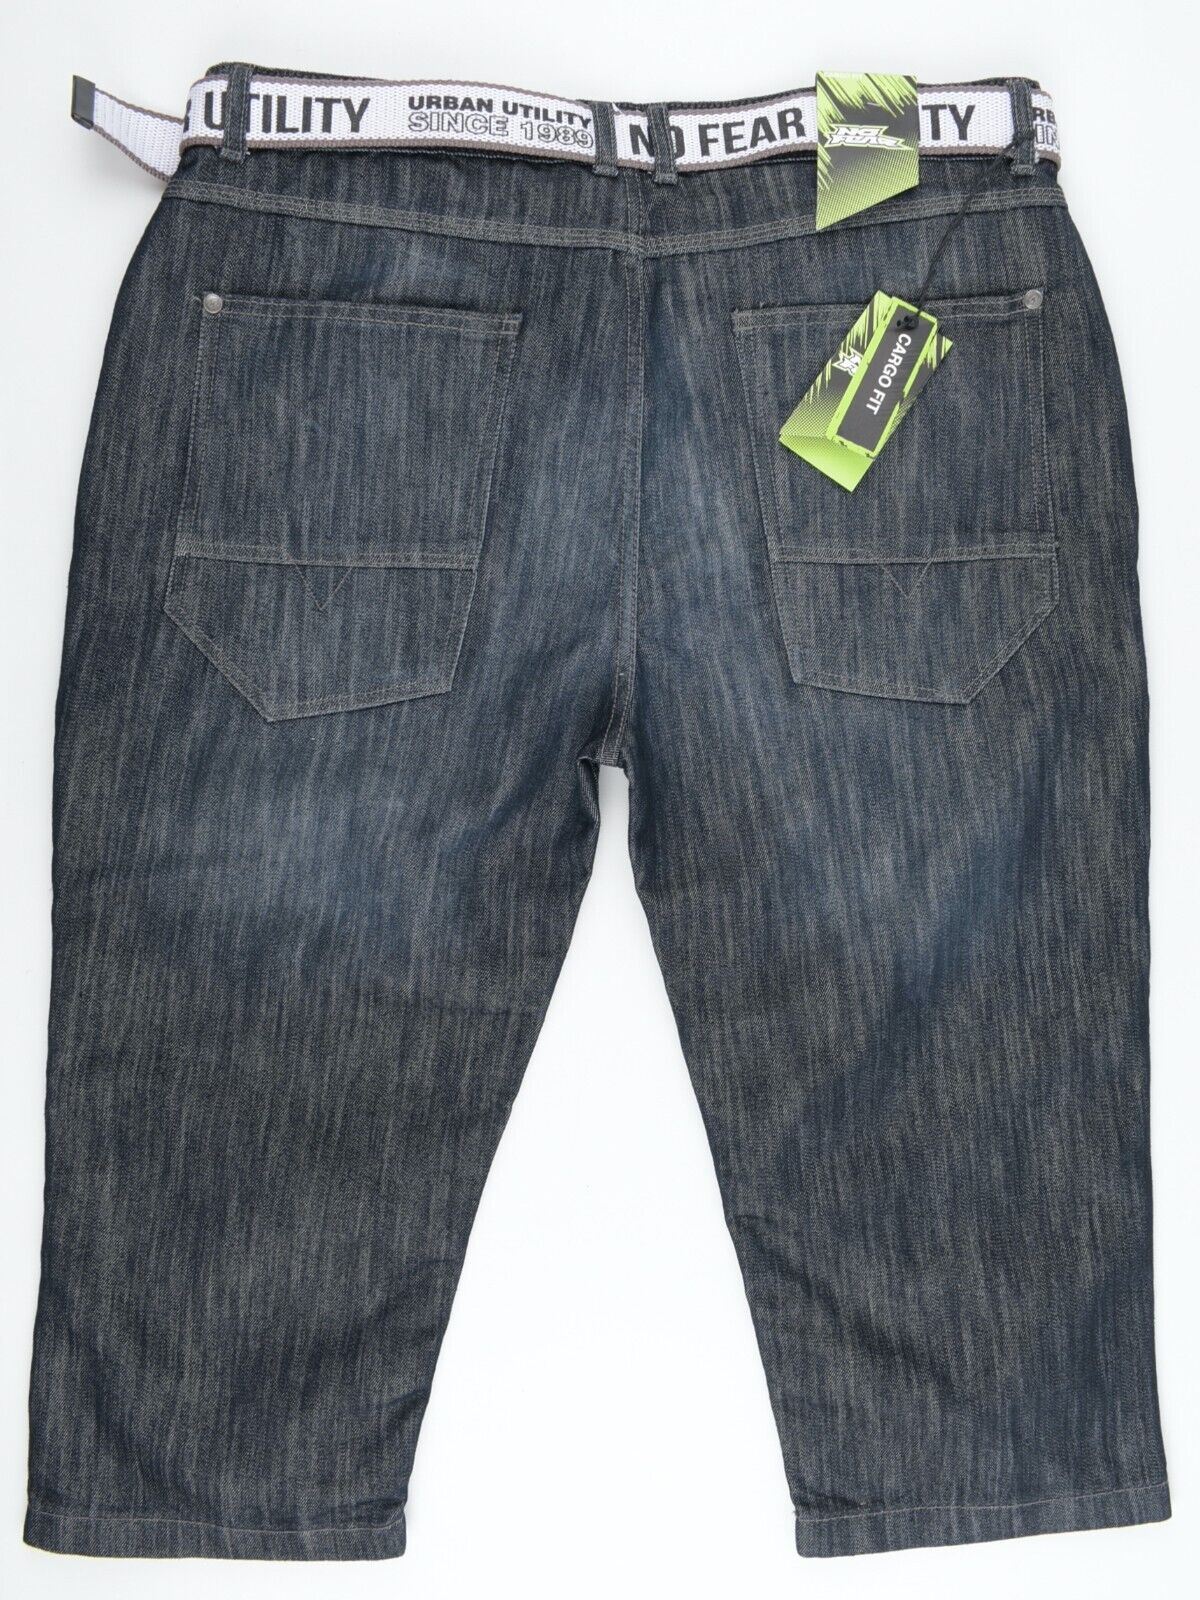 NO FEAR Men's Denim Shorts, Cargo Fit, Dark Blue Wash, size XL